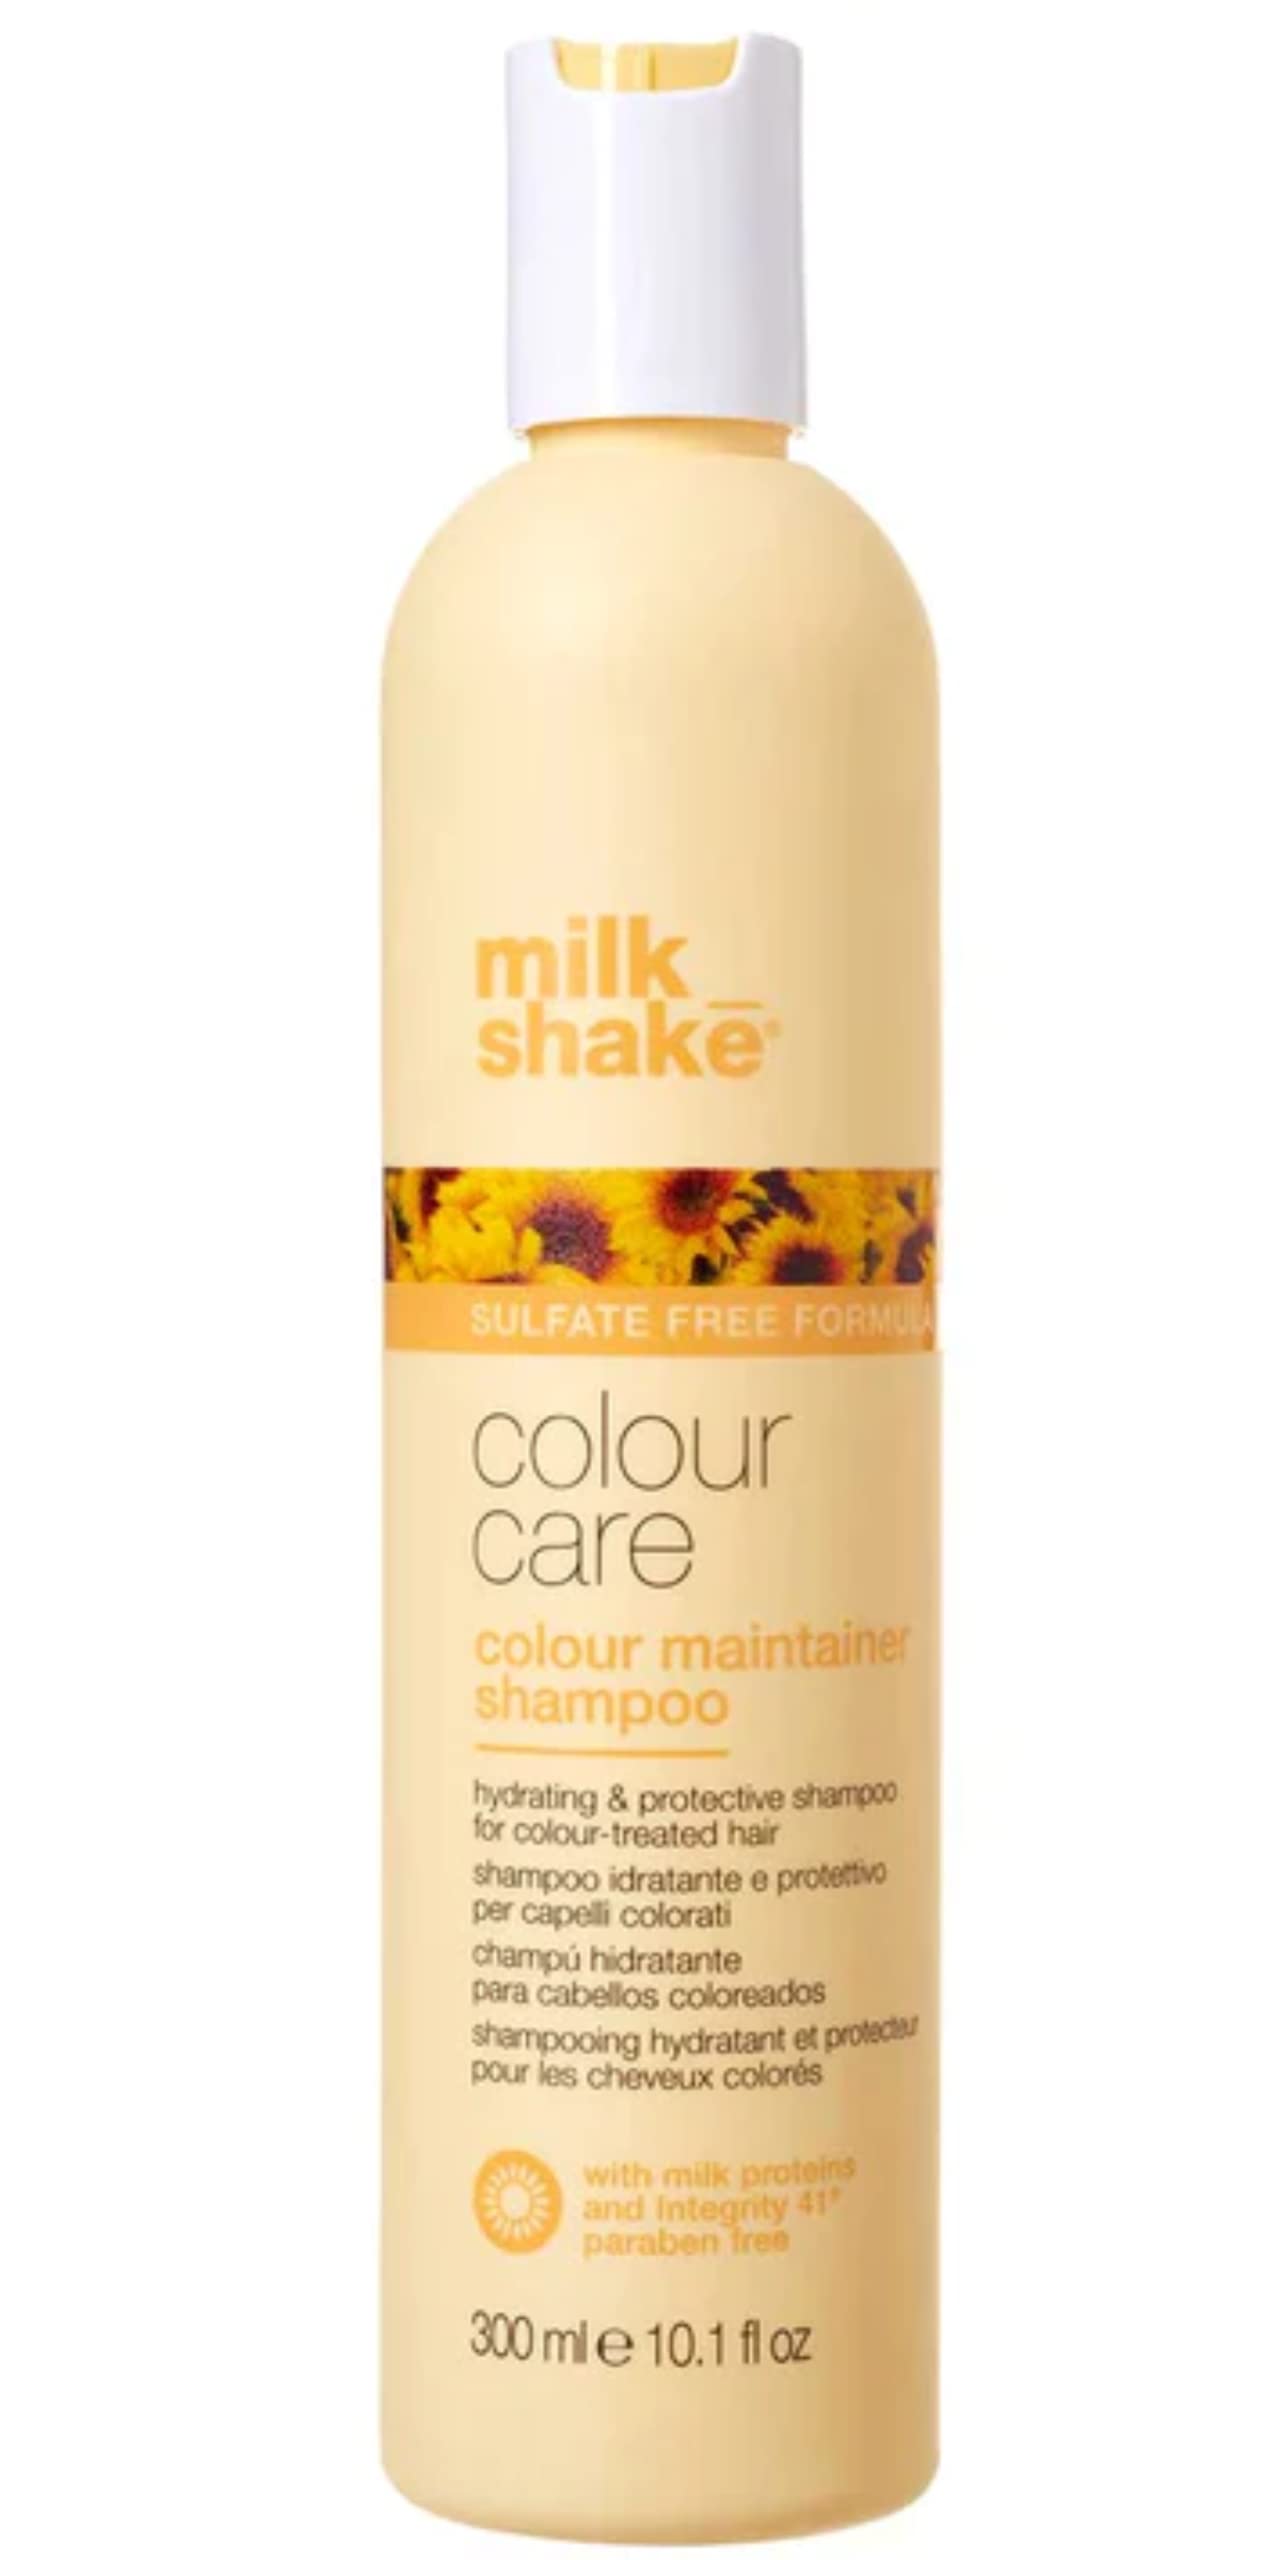 milk shake szampon color care